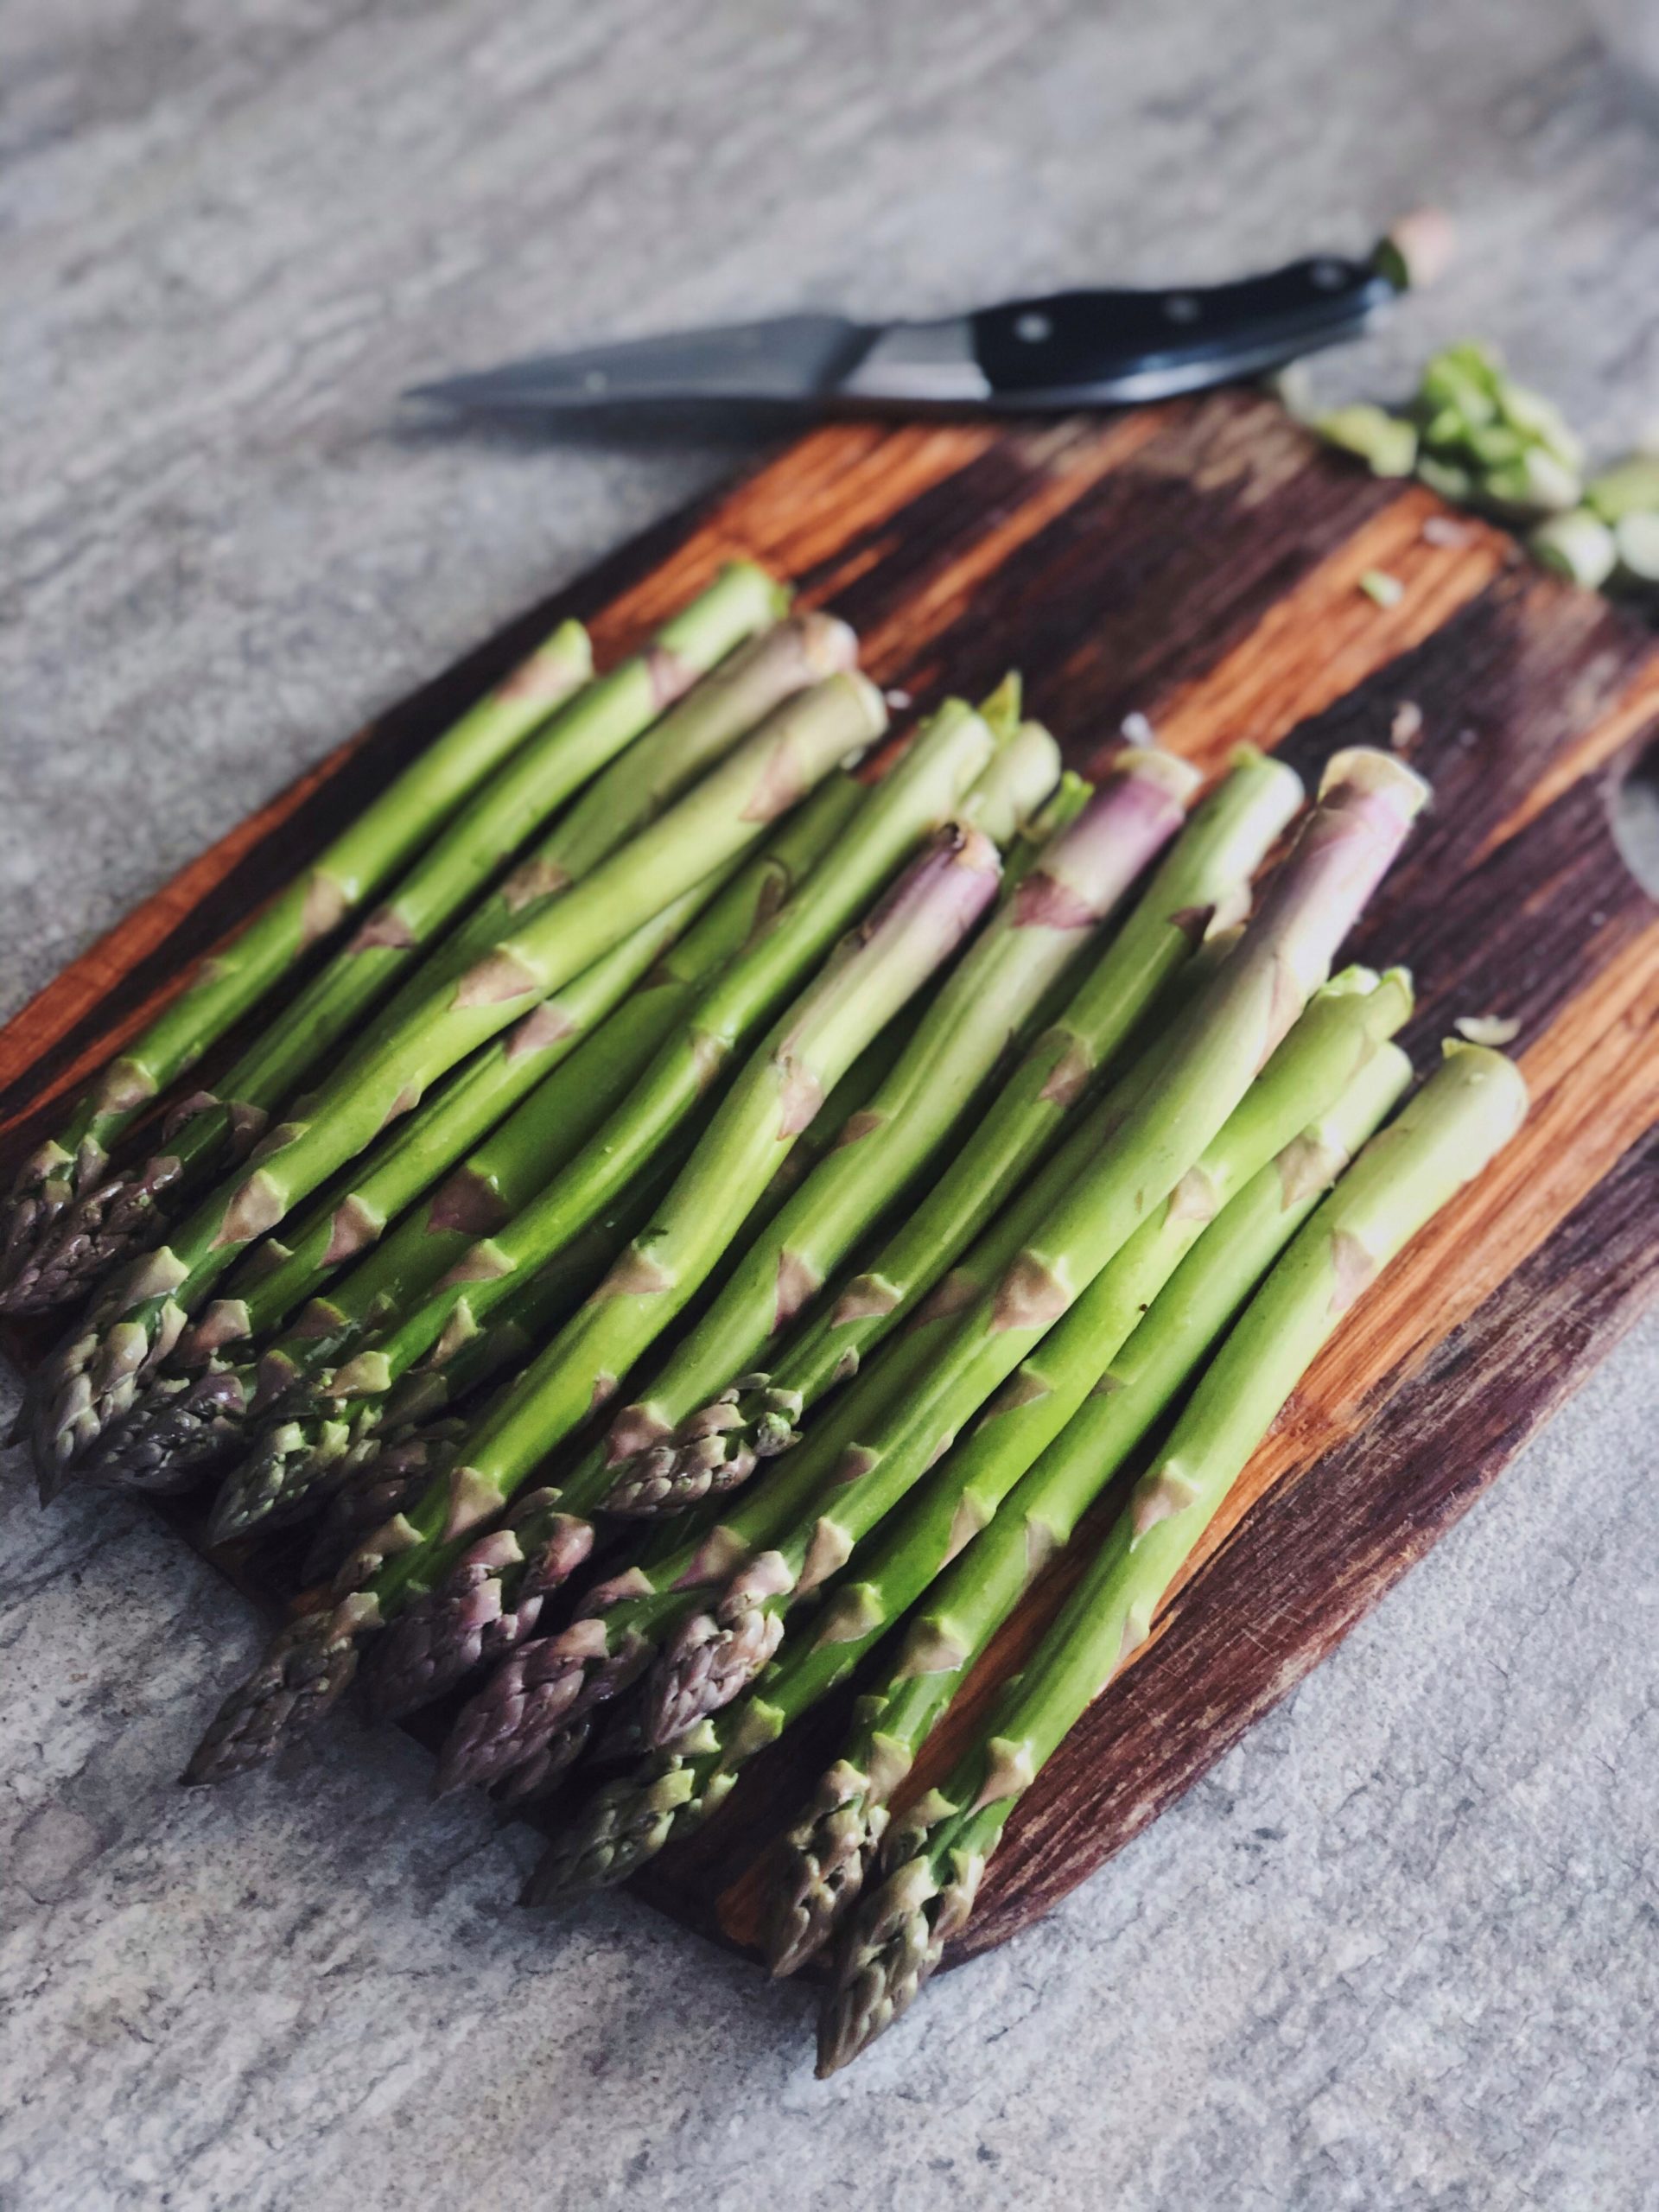 Asparagus is in Season!